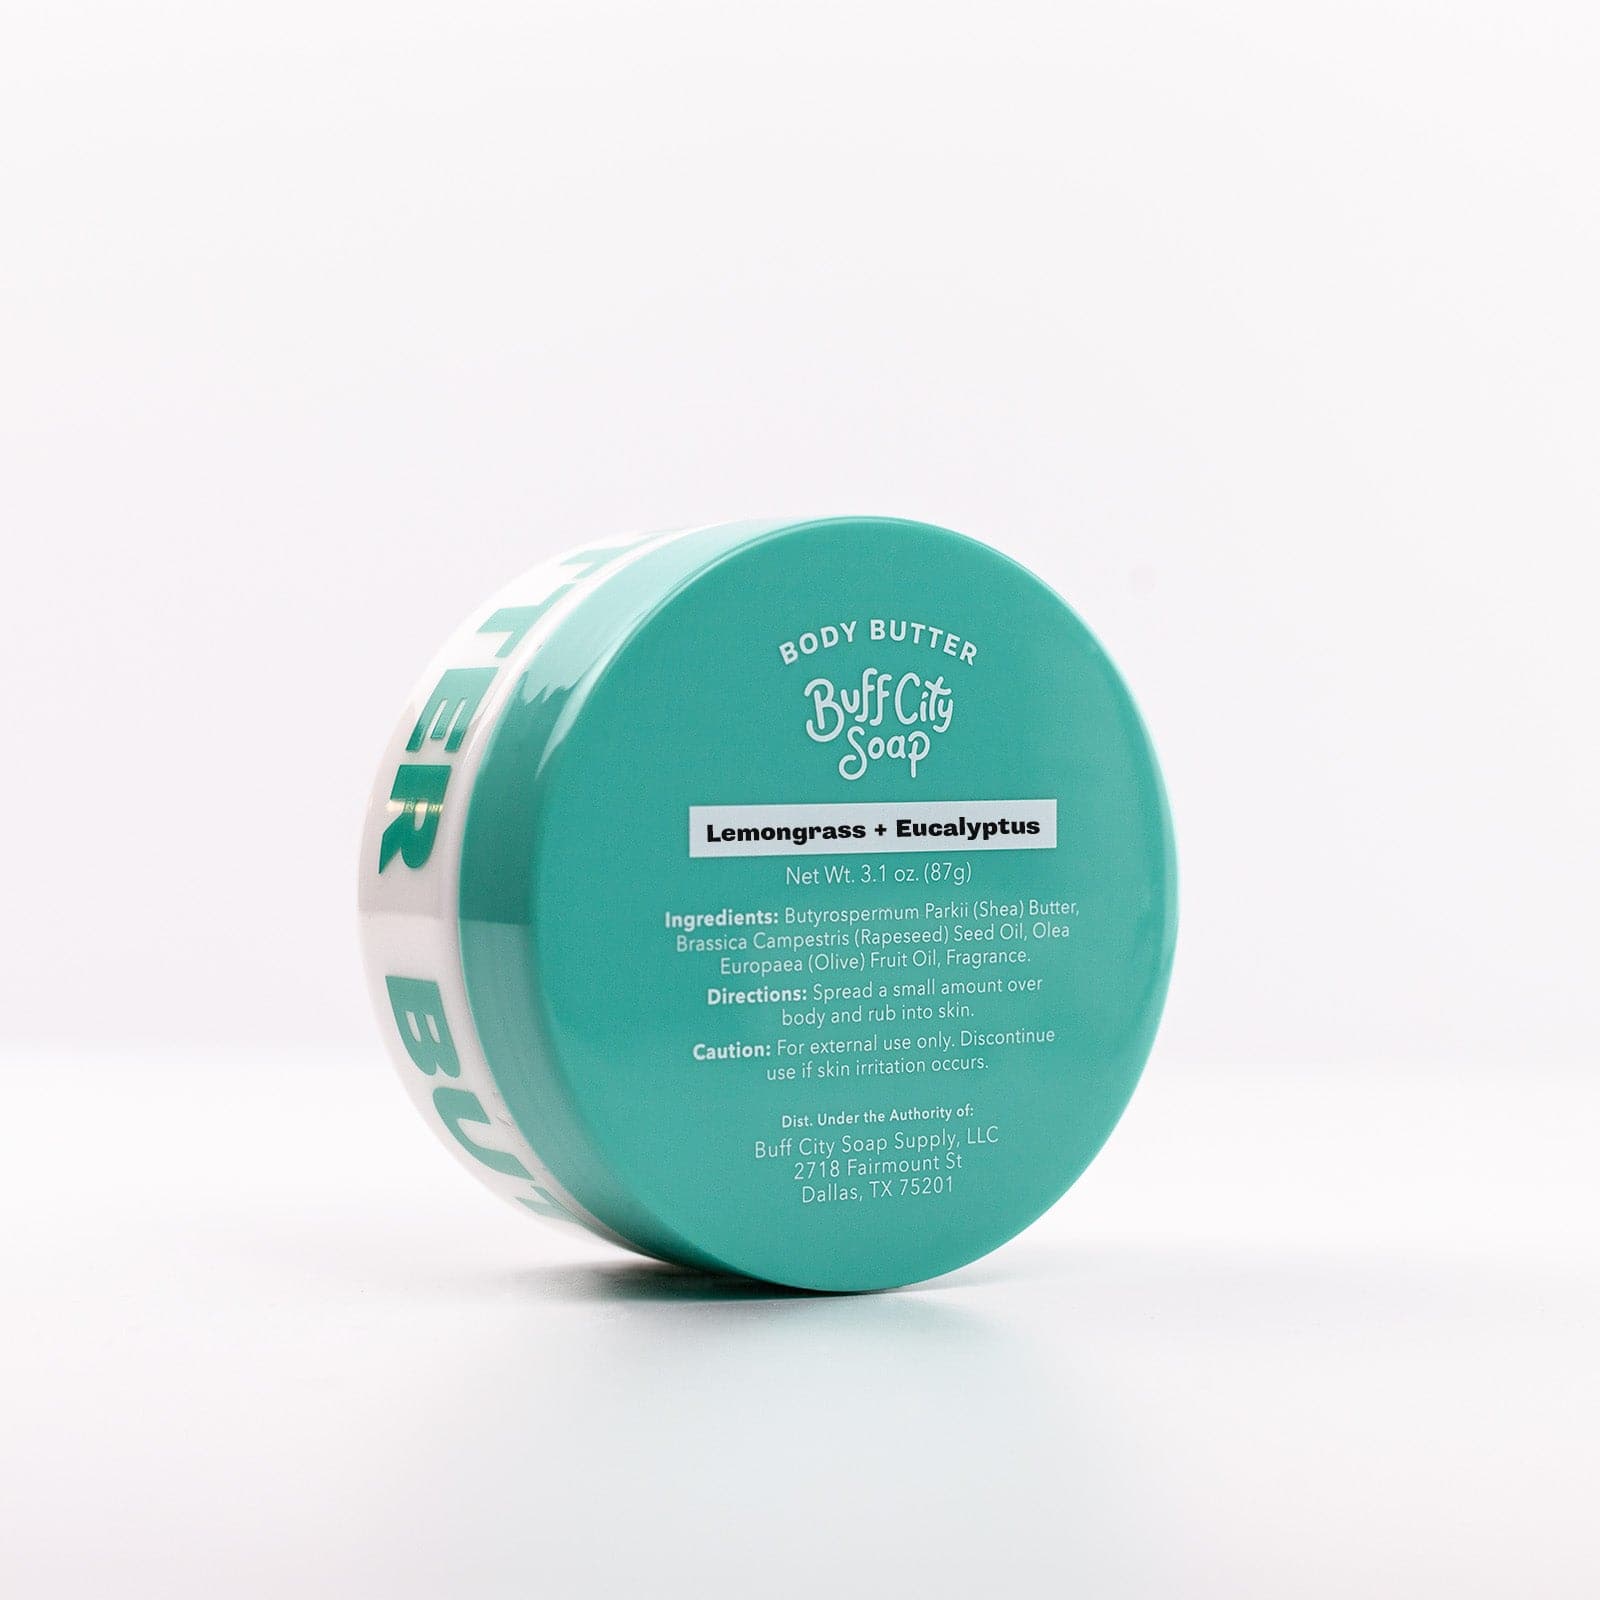 Buff City Soap's lemongrass + eucalyptus scented body butter lid listing precautions angled